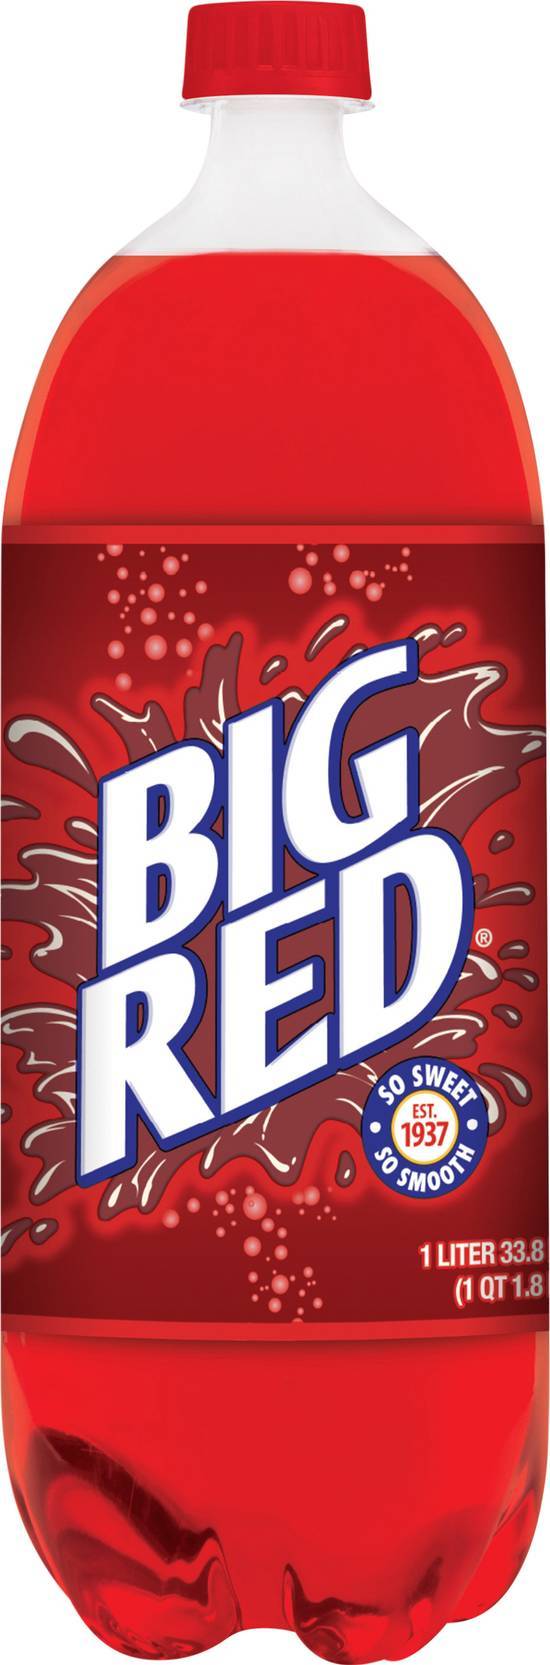 Big Red Original Soda (33.8 fl oz)